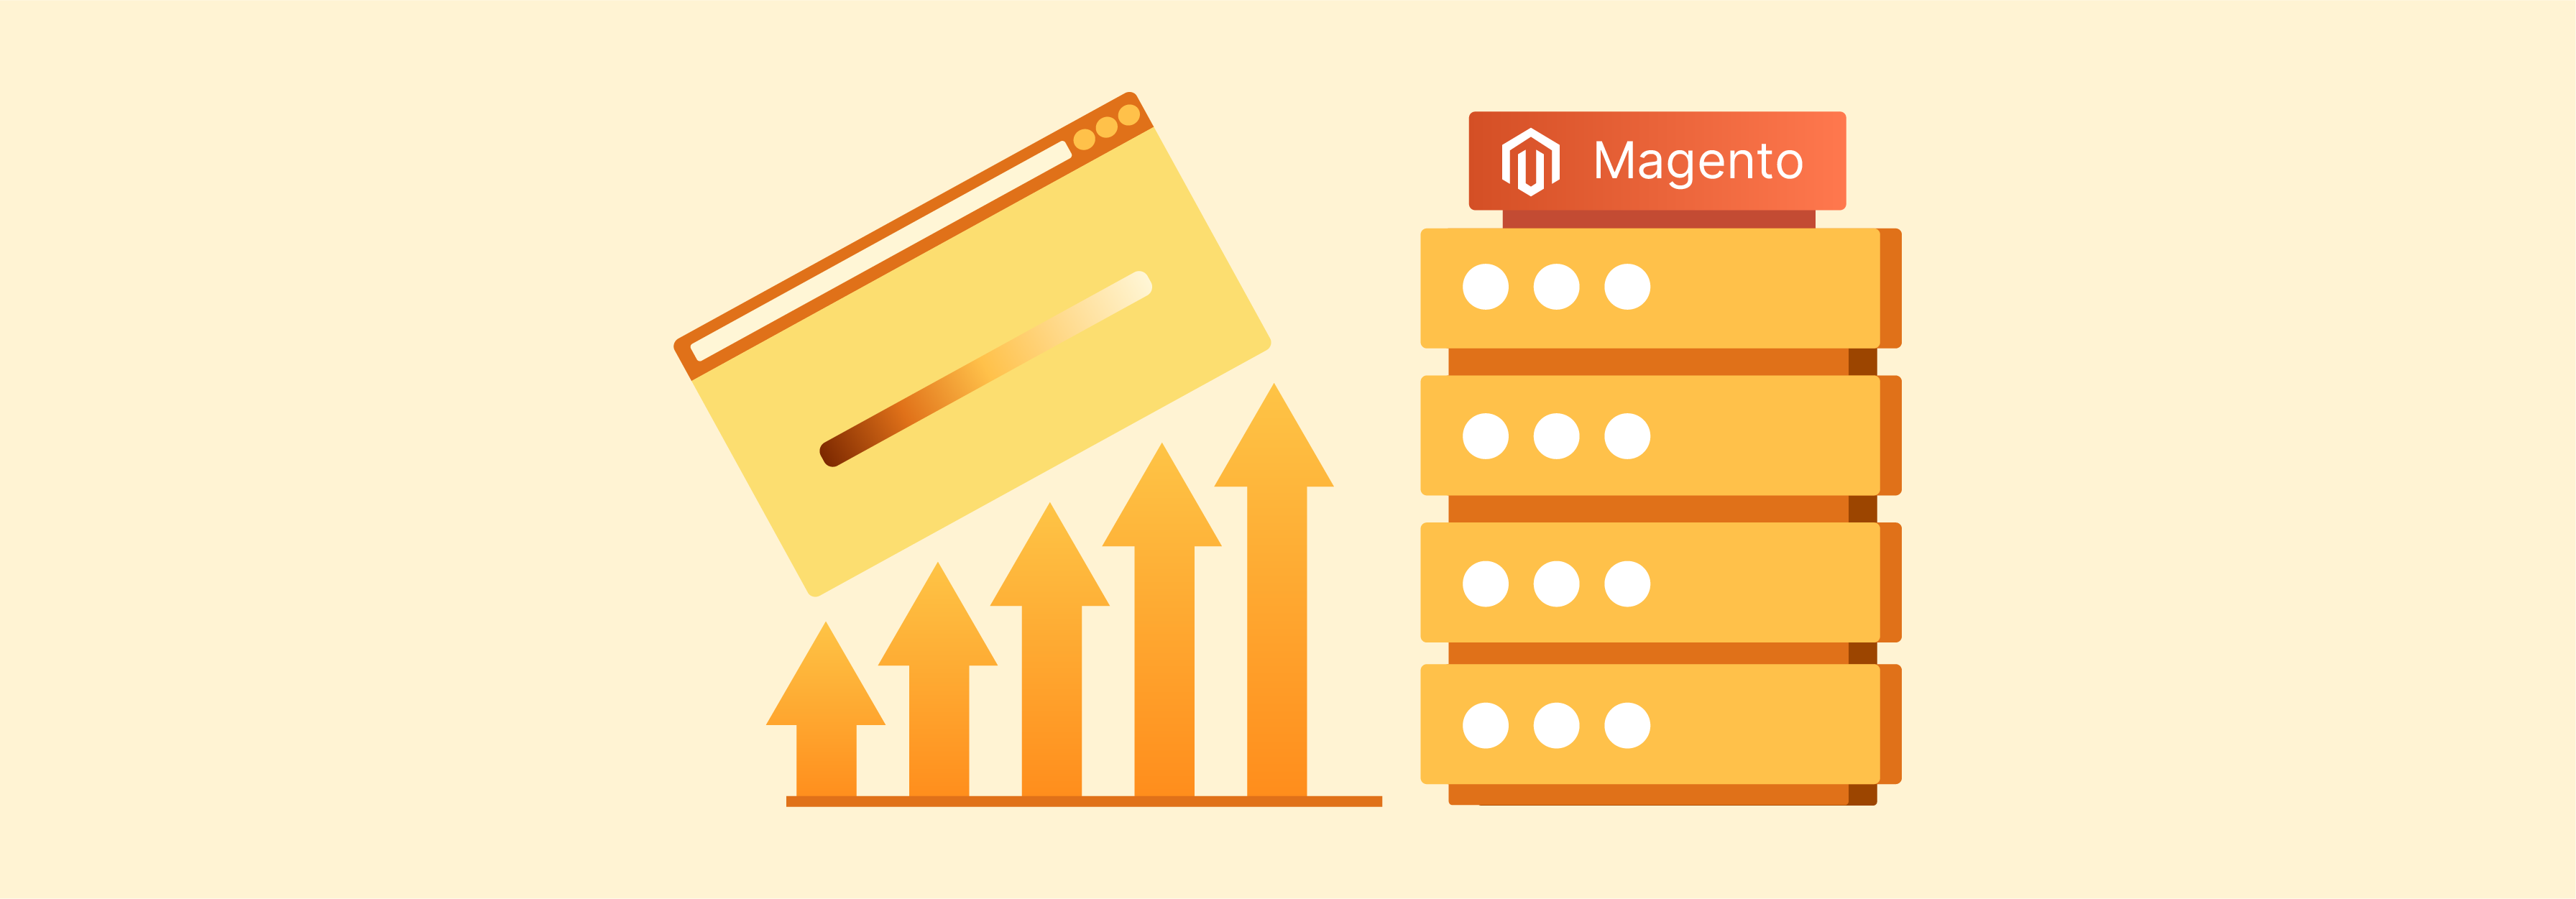 Enhanced performance metrics for Magento hosting in Toronto, showcasing speed and reliability